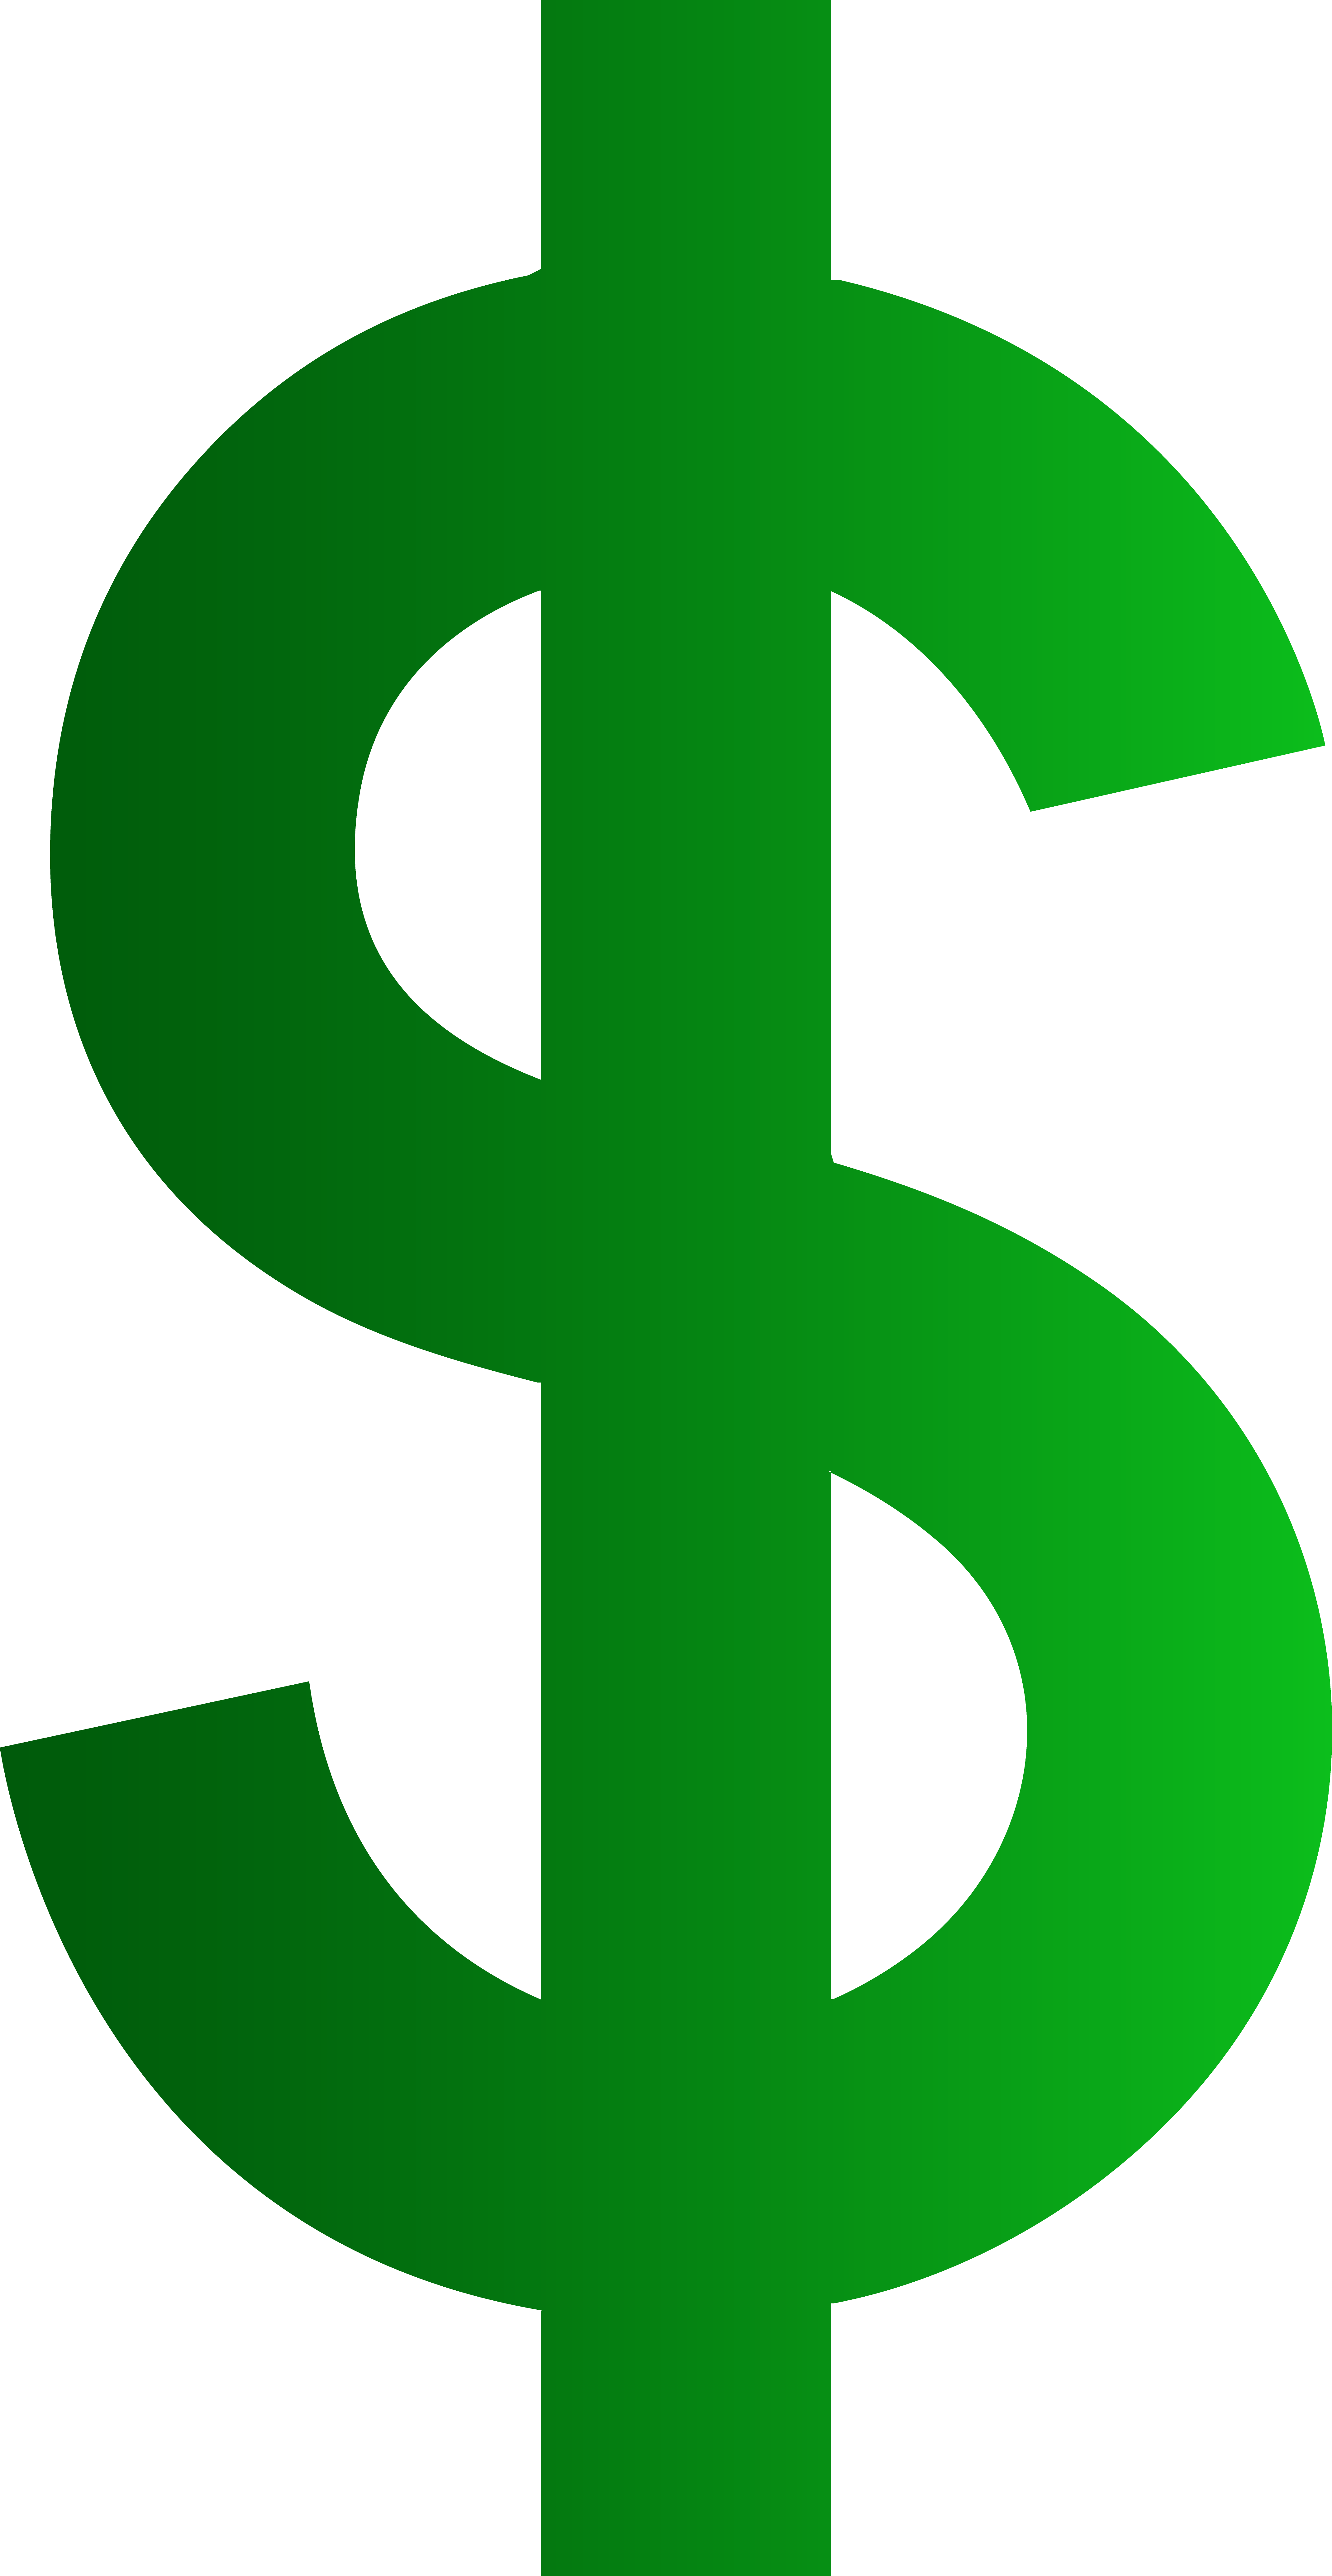 Money Symbol Images